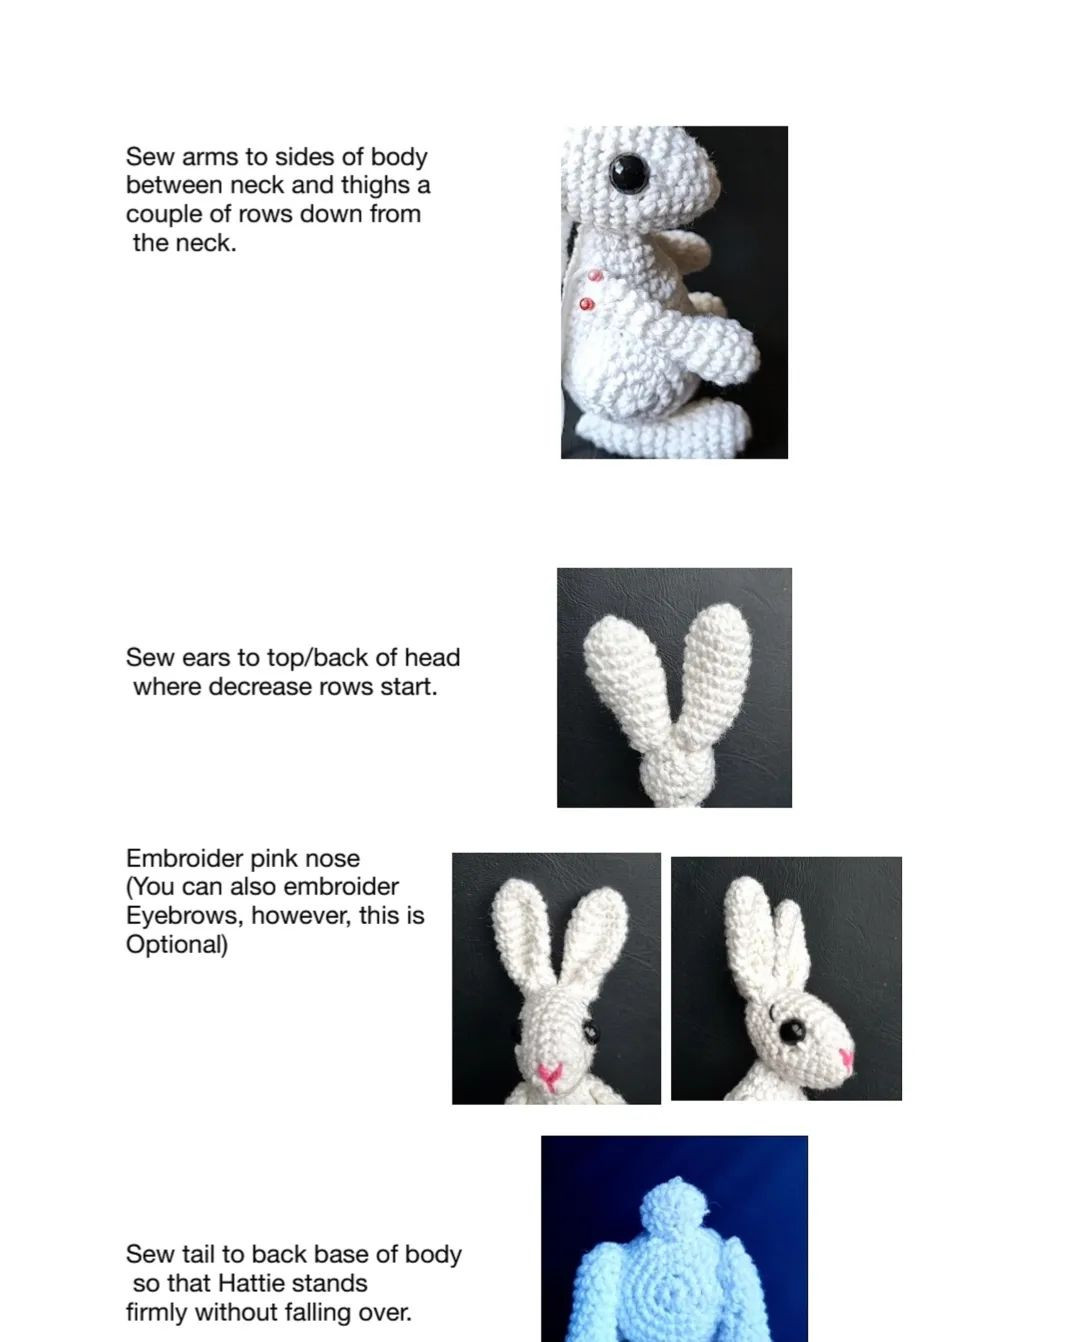 Long-eared white rabbit crochet pattern, holding a flower in the hand.